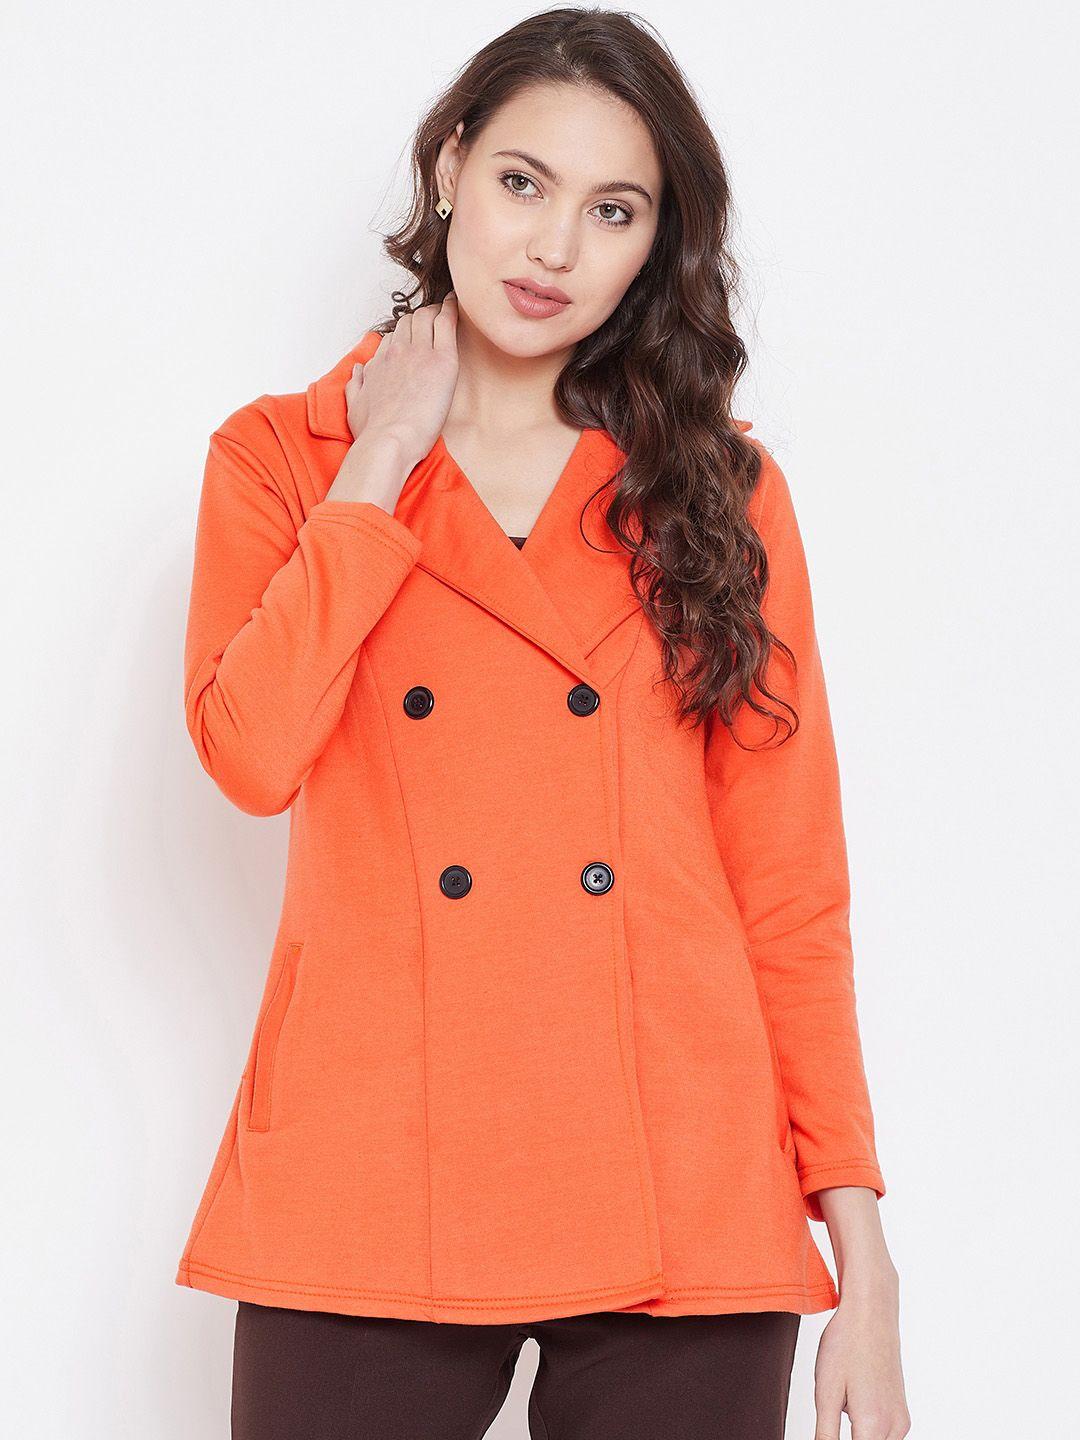 belle-fille-women-orange-double-breasted-solid-jacket